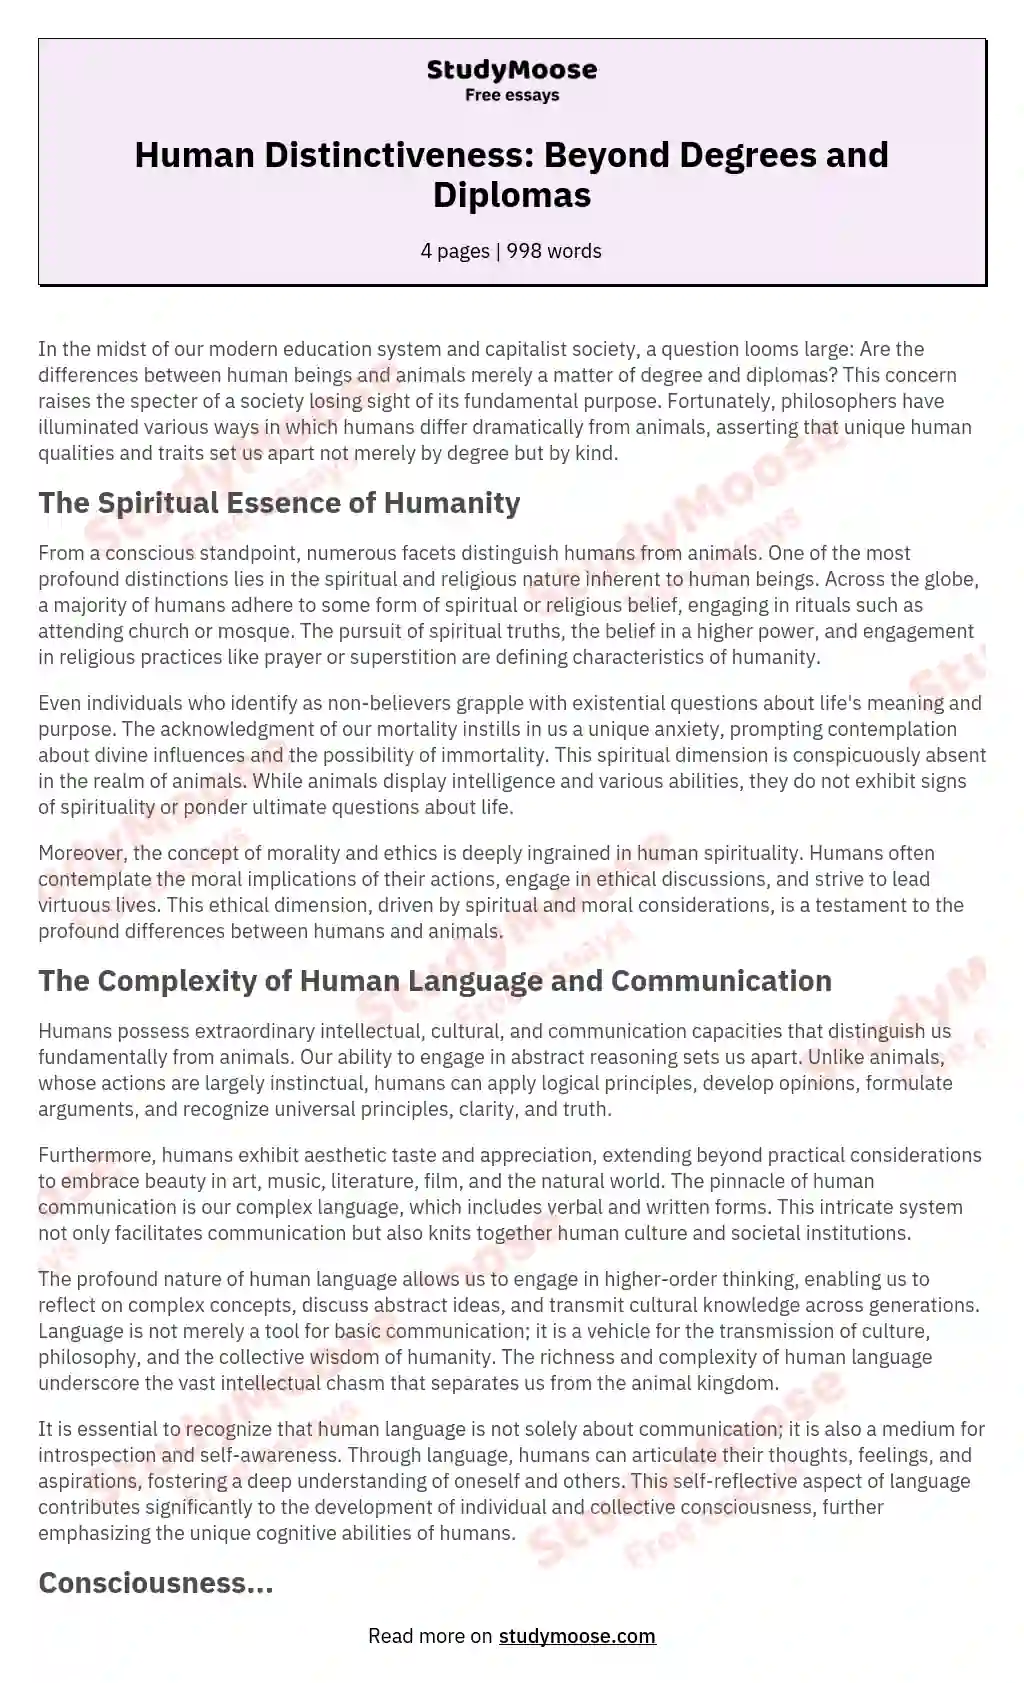 Human Distinctiveness: Beyond Degrees and Diplomas essay